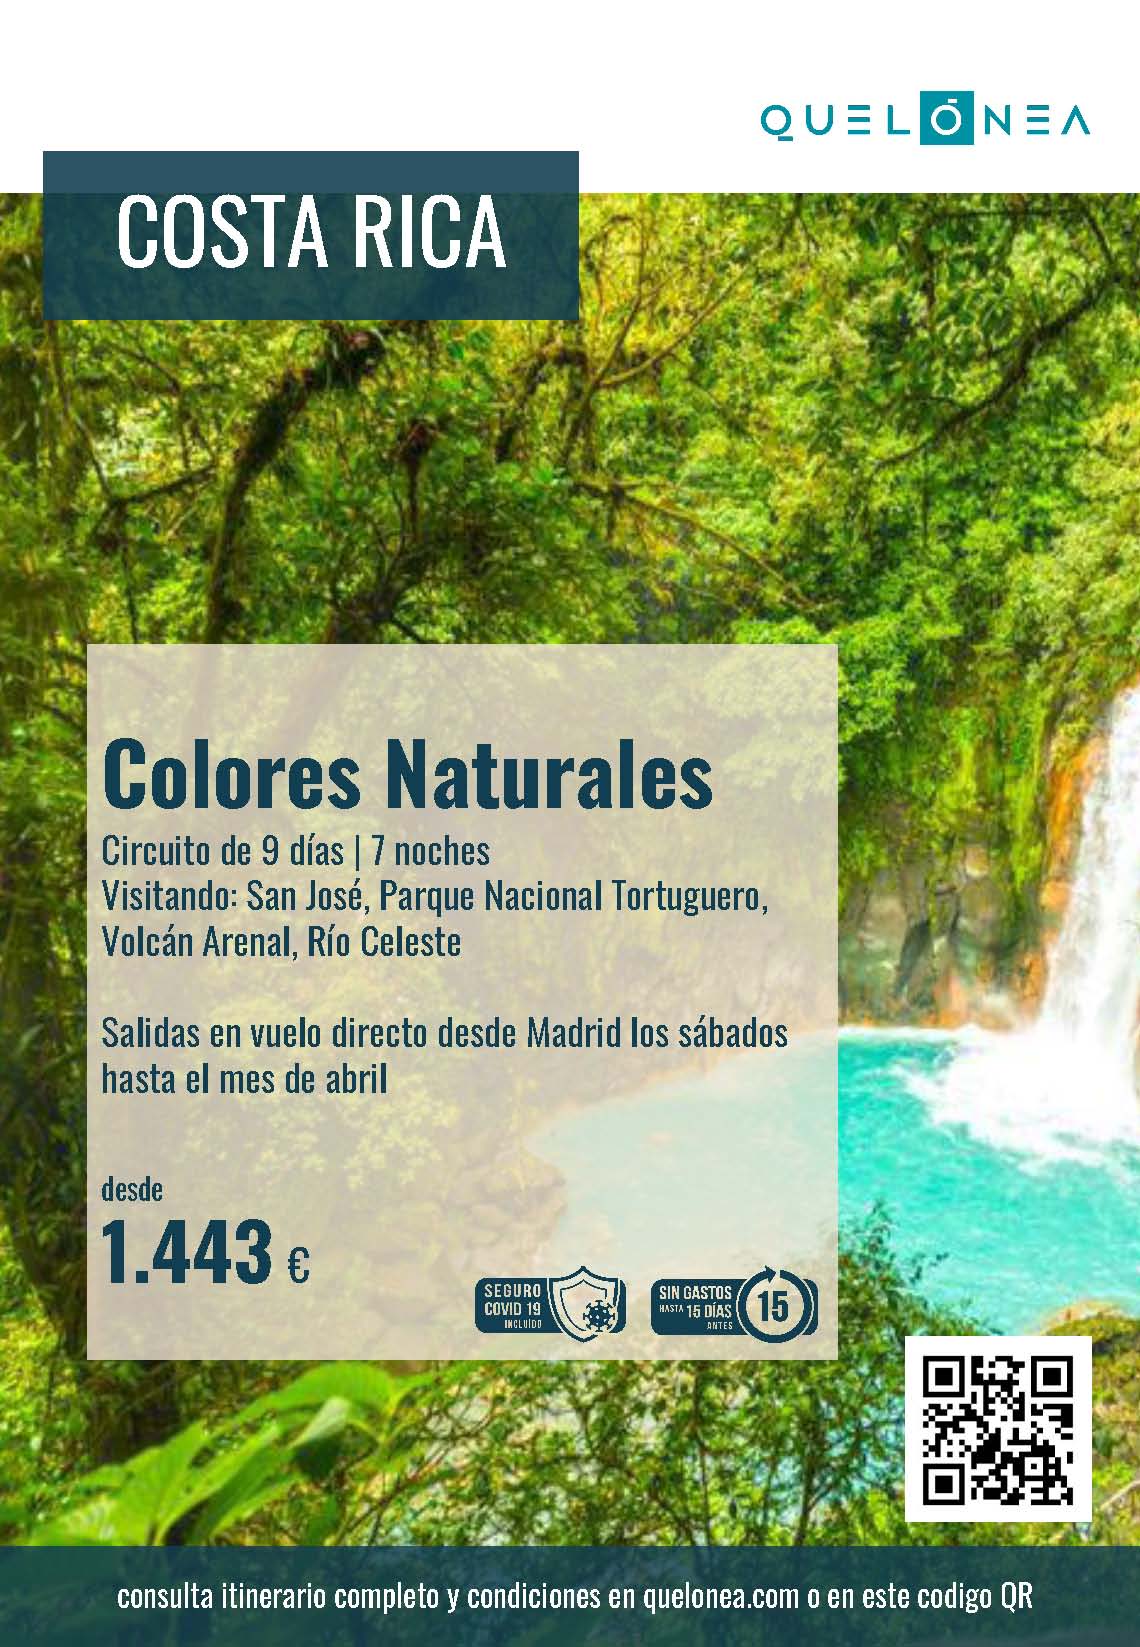 Oferta Quelonea Costa Rica Colores Naturales 9 dias Noviembre 2021 a Abril 2022 vuelo directo desde Madrid